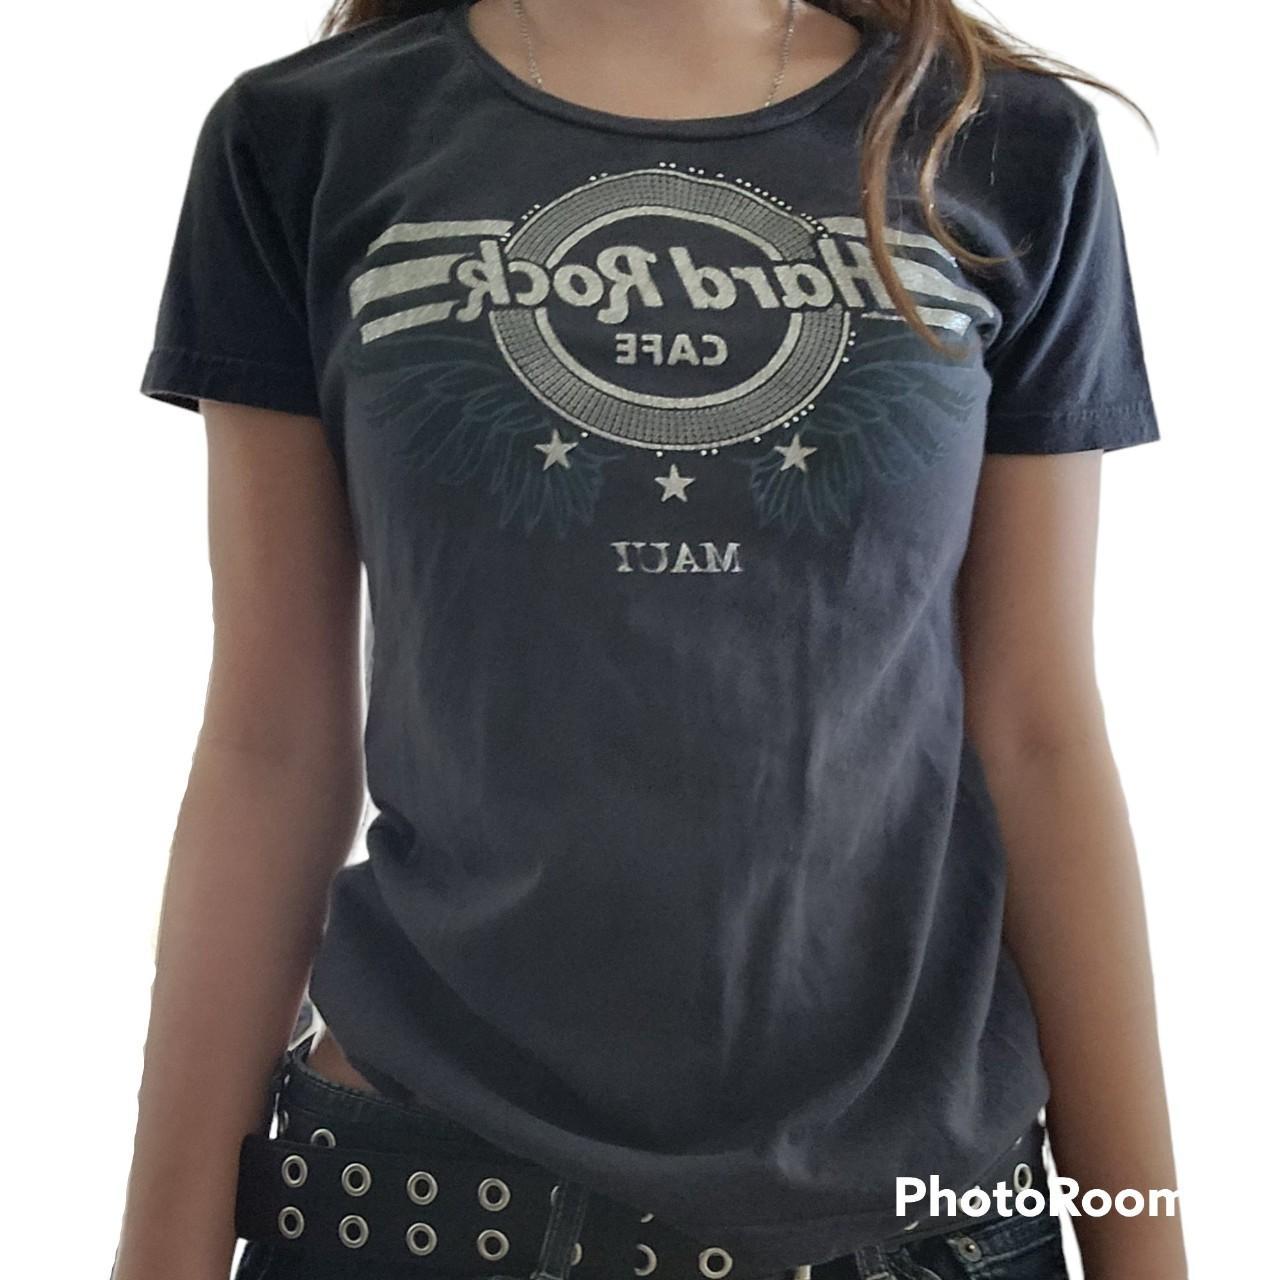 Hard Rock Cafe Women's Grey and Blue T-shirt (3)